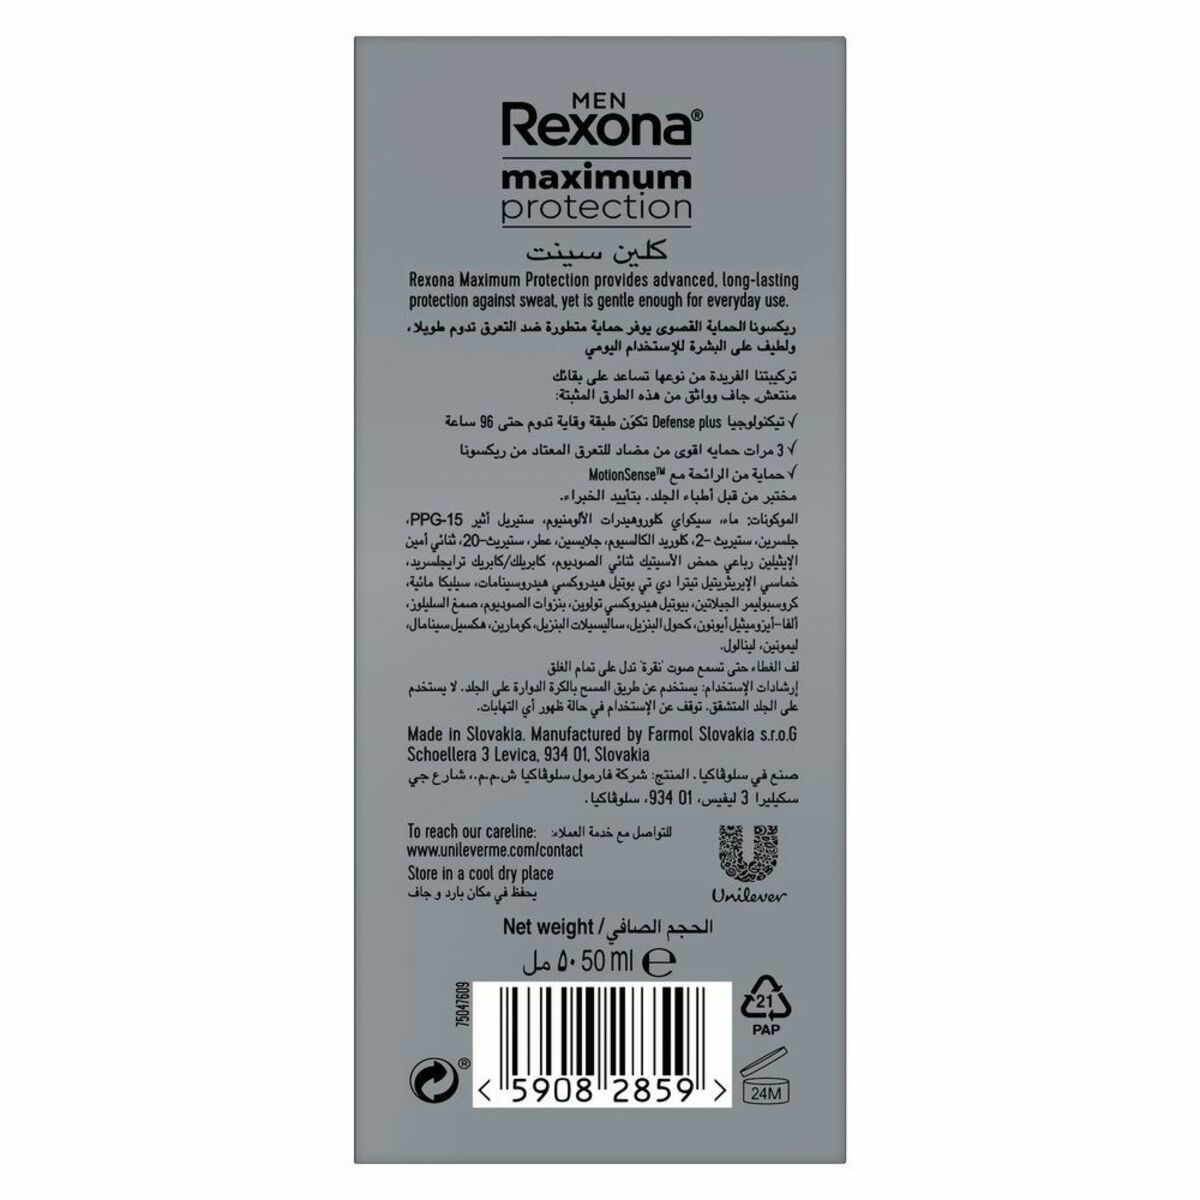 Rexona Men Antiperspirant Roll-On Clean Scent 50ml